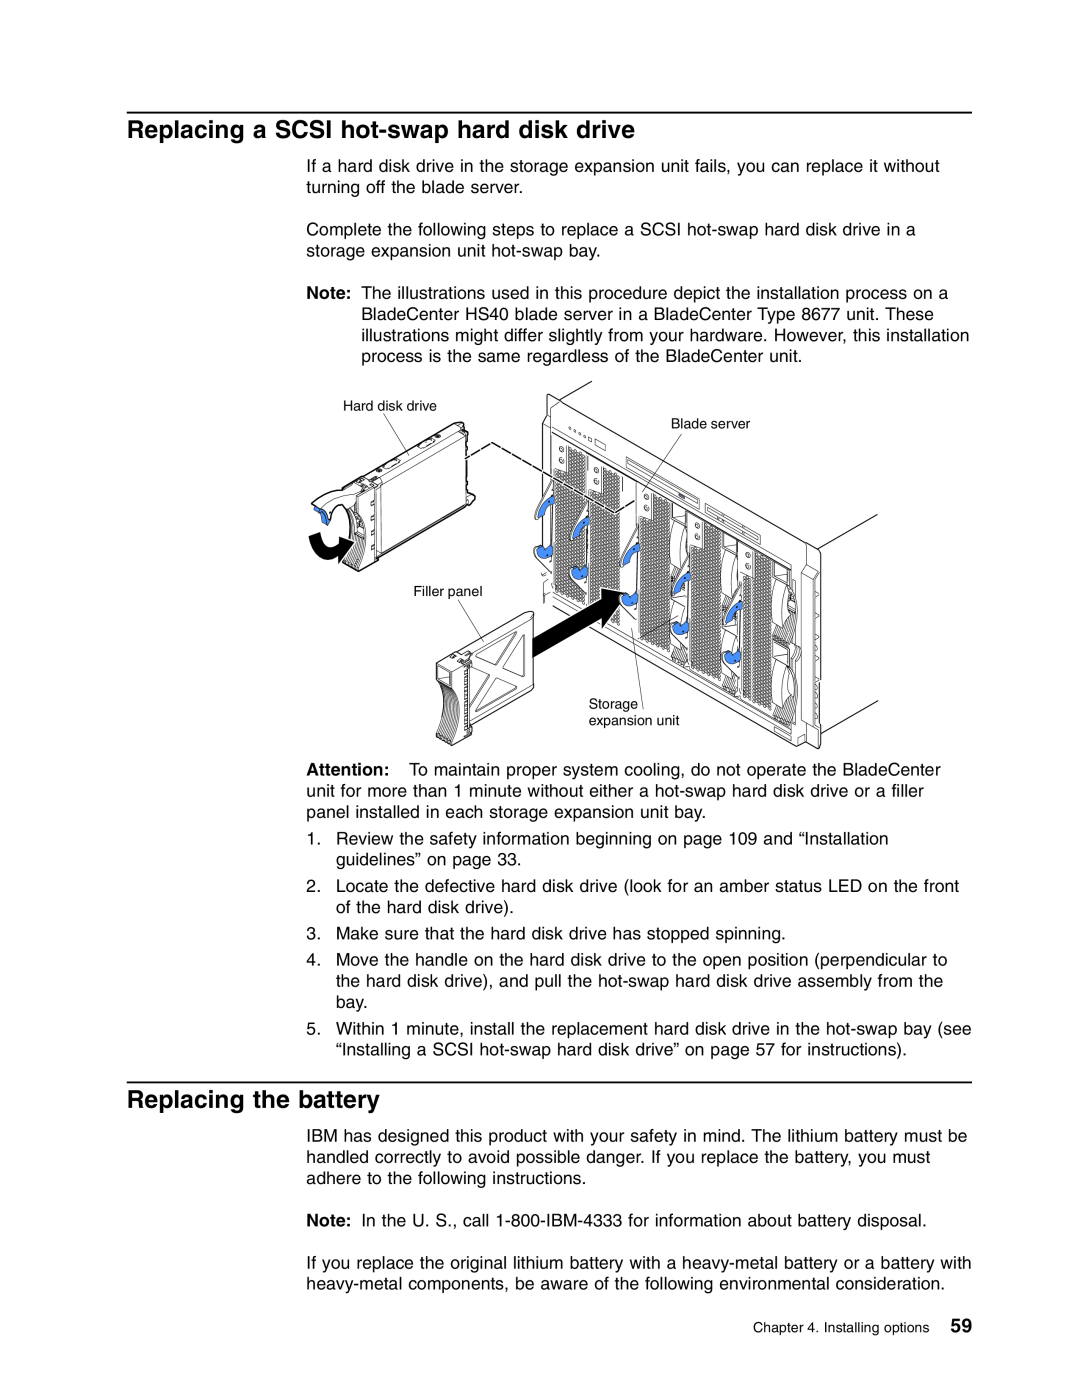 IBM HS40 manual Replacing a SCSI hot-swap hard disk drive, Replacing the battery 